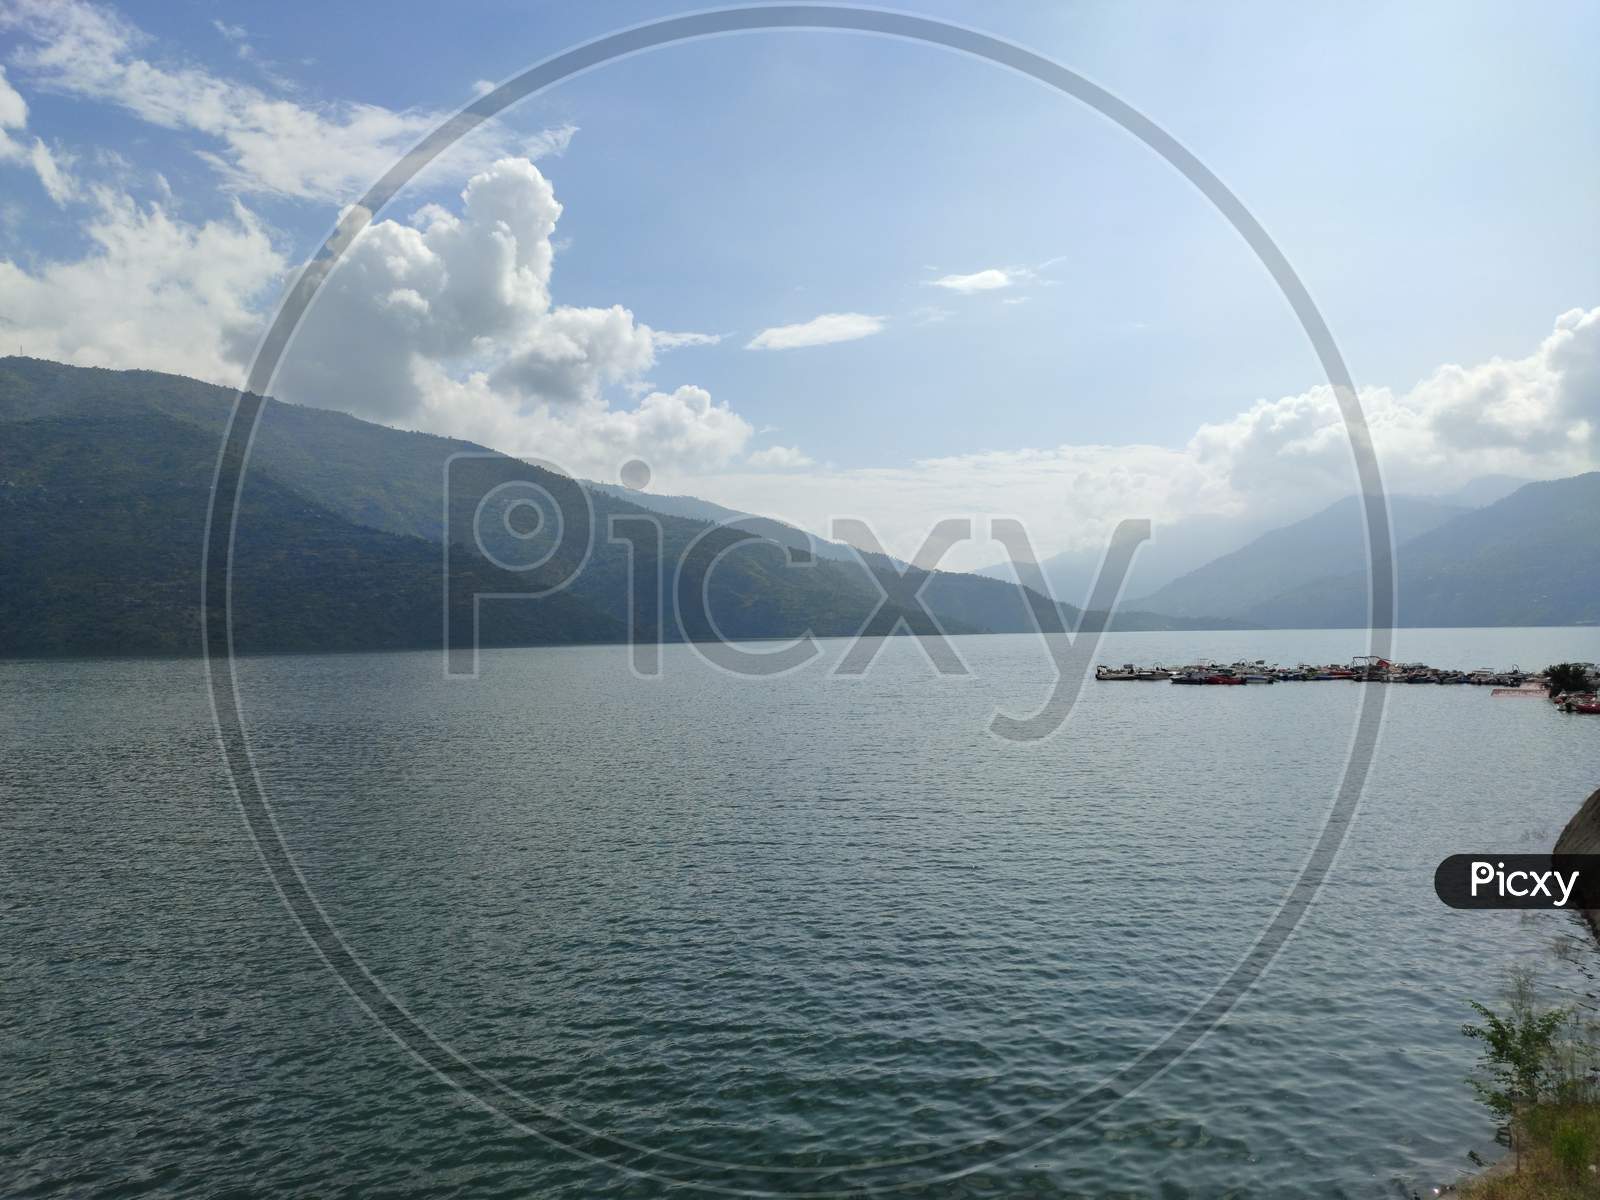 The beautiful lake name is Tehri lake situated in New tehri Uttarakhand, India.